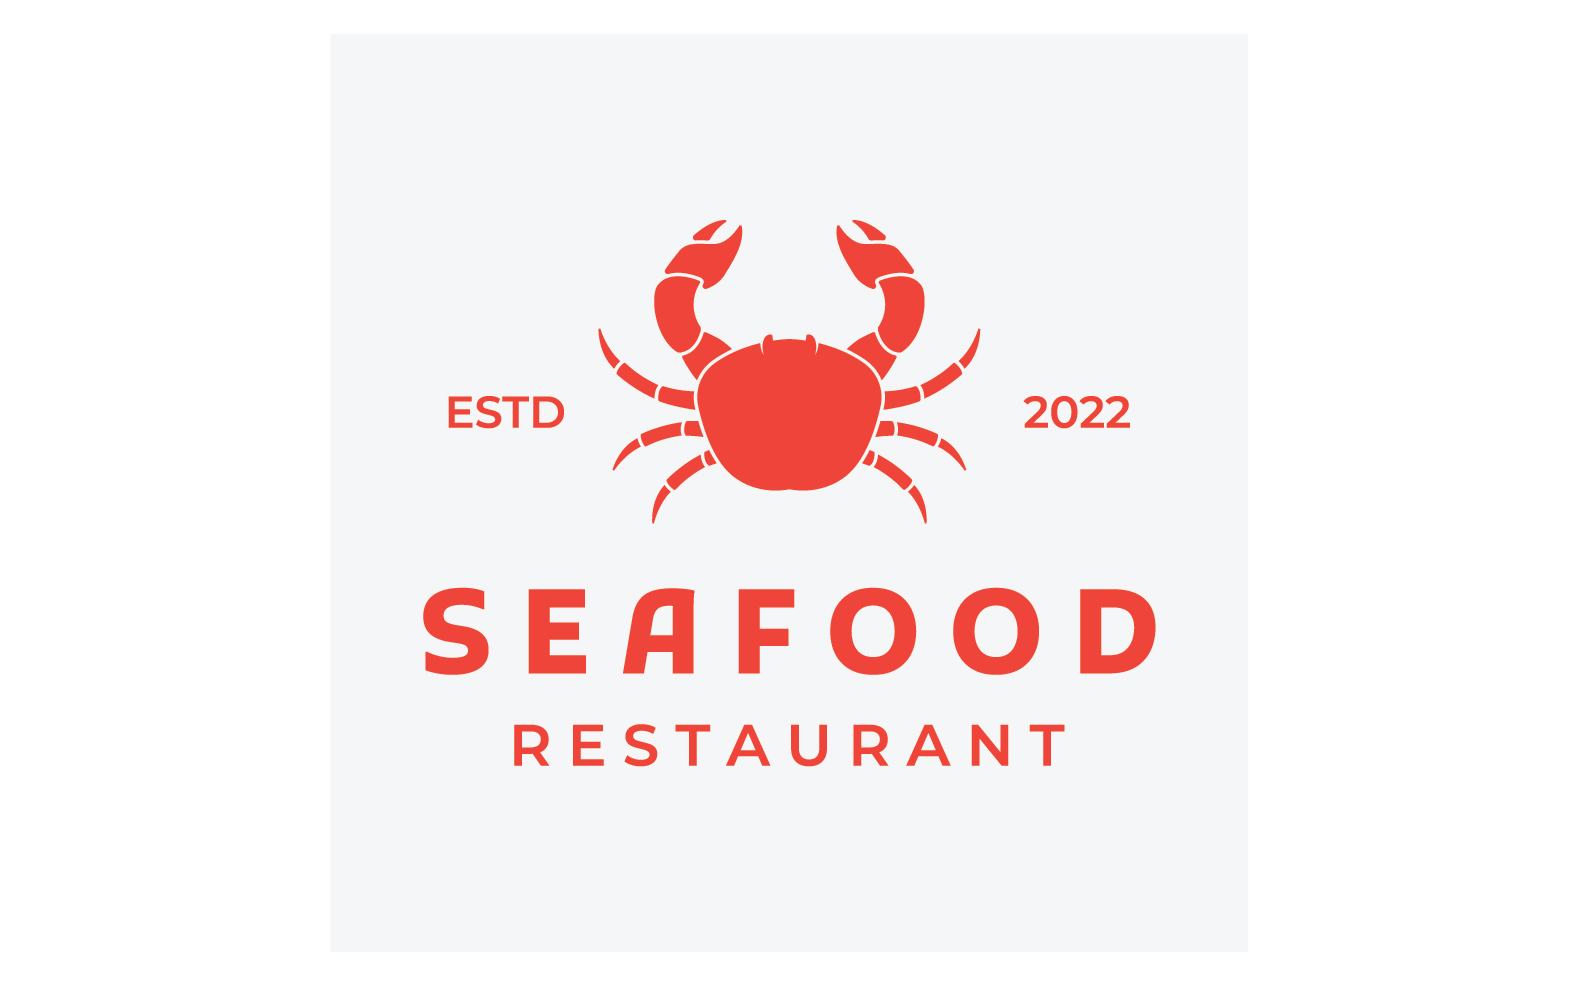 Seafood crab food fresh logo 4